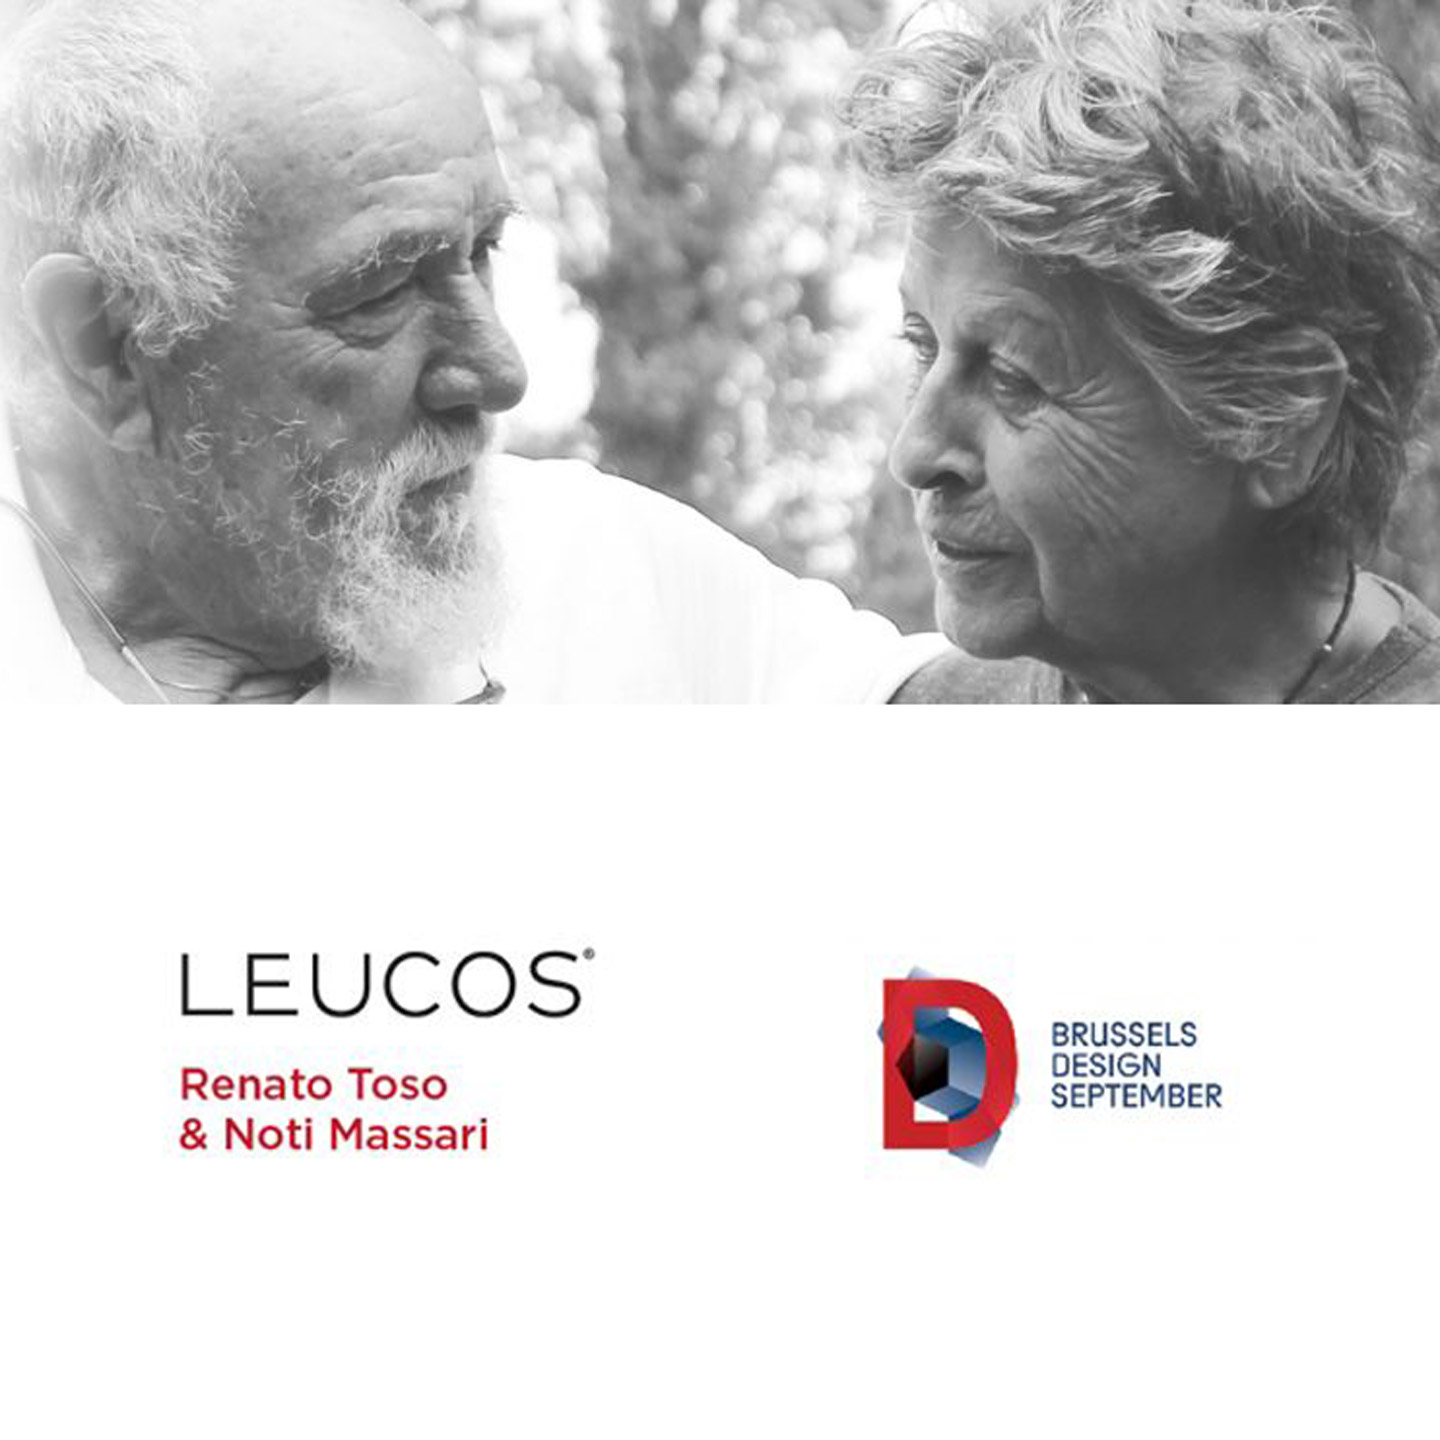 Conferenza Toso & Massari a “Brussels Design September”